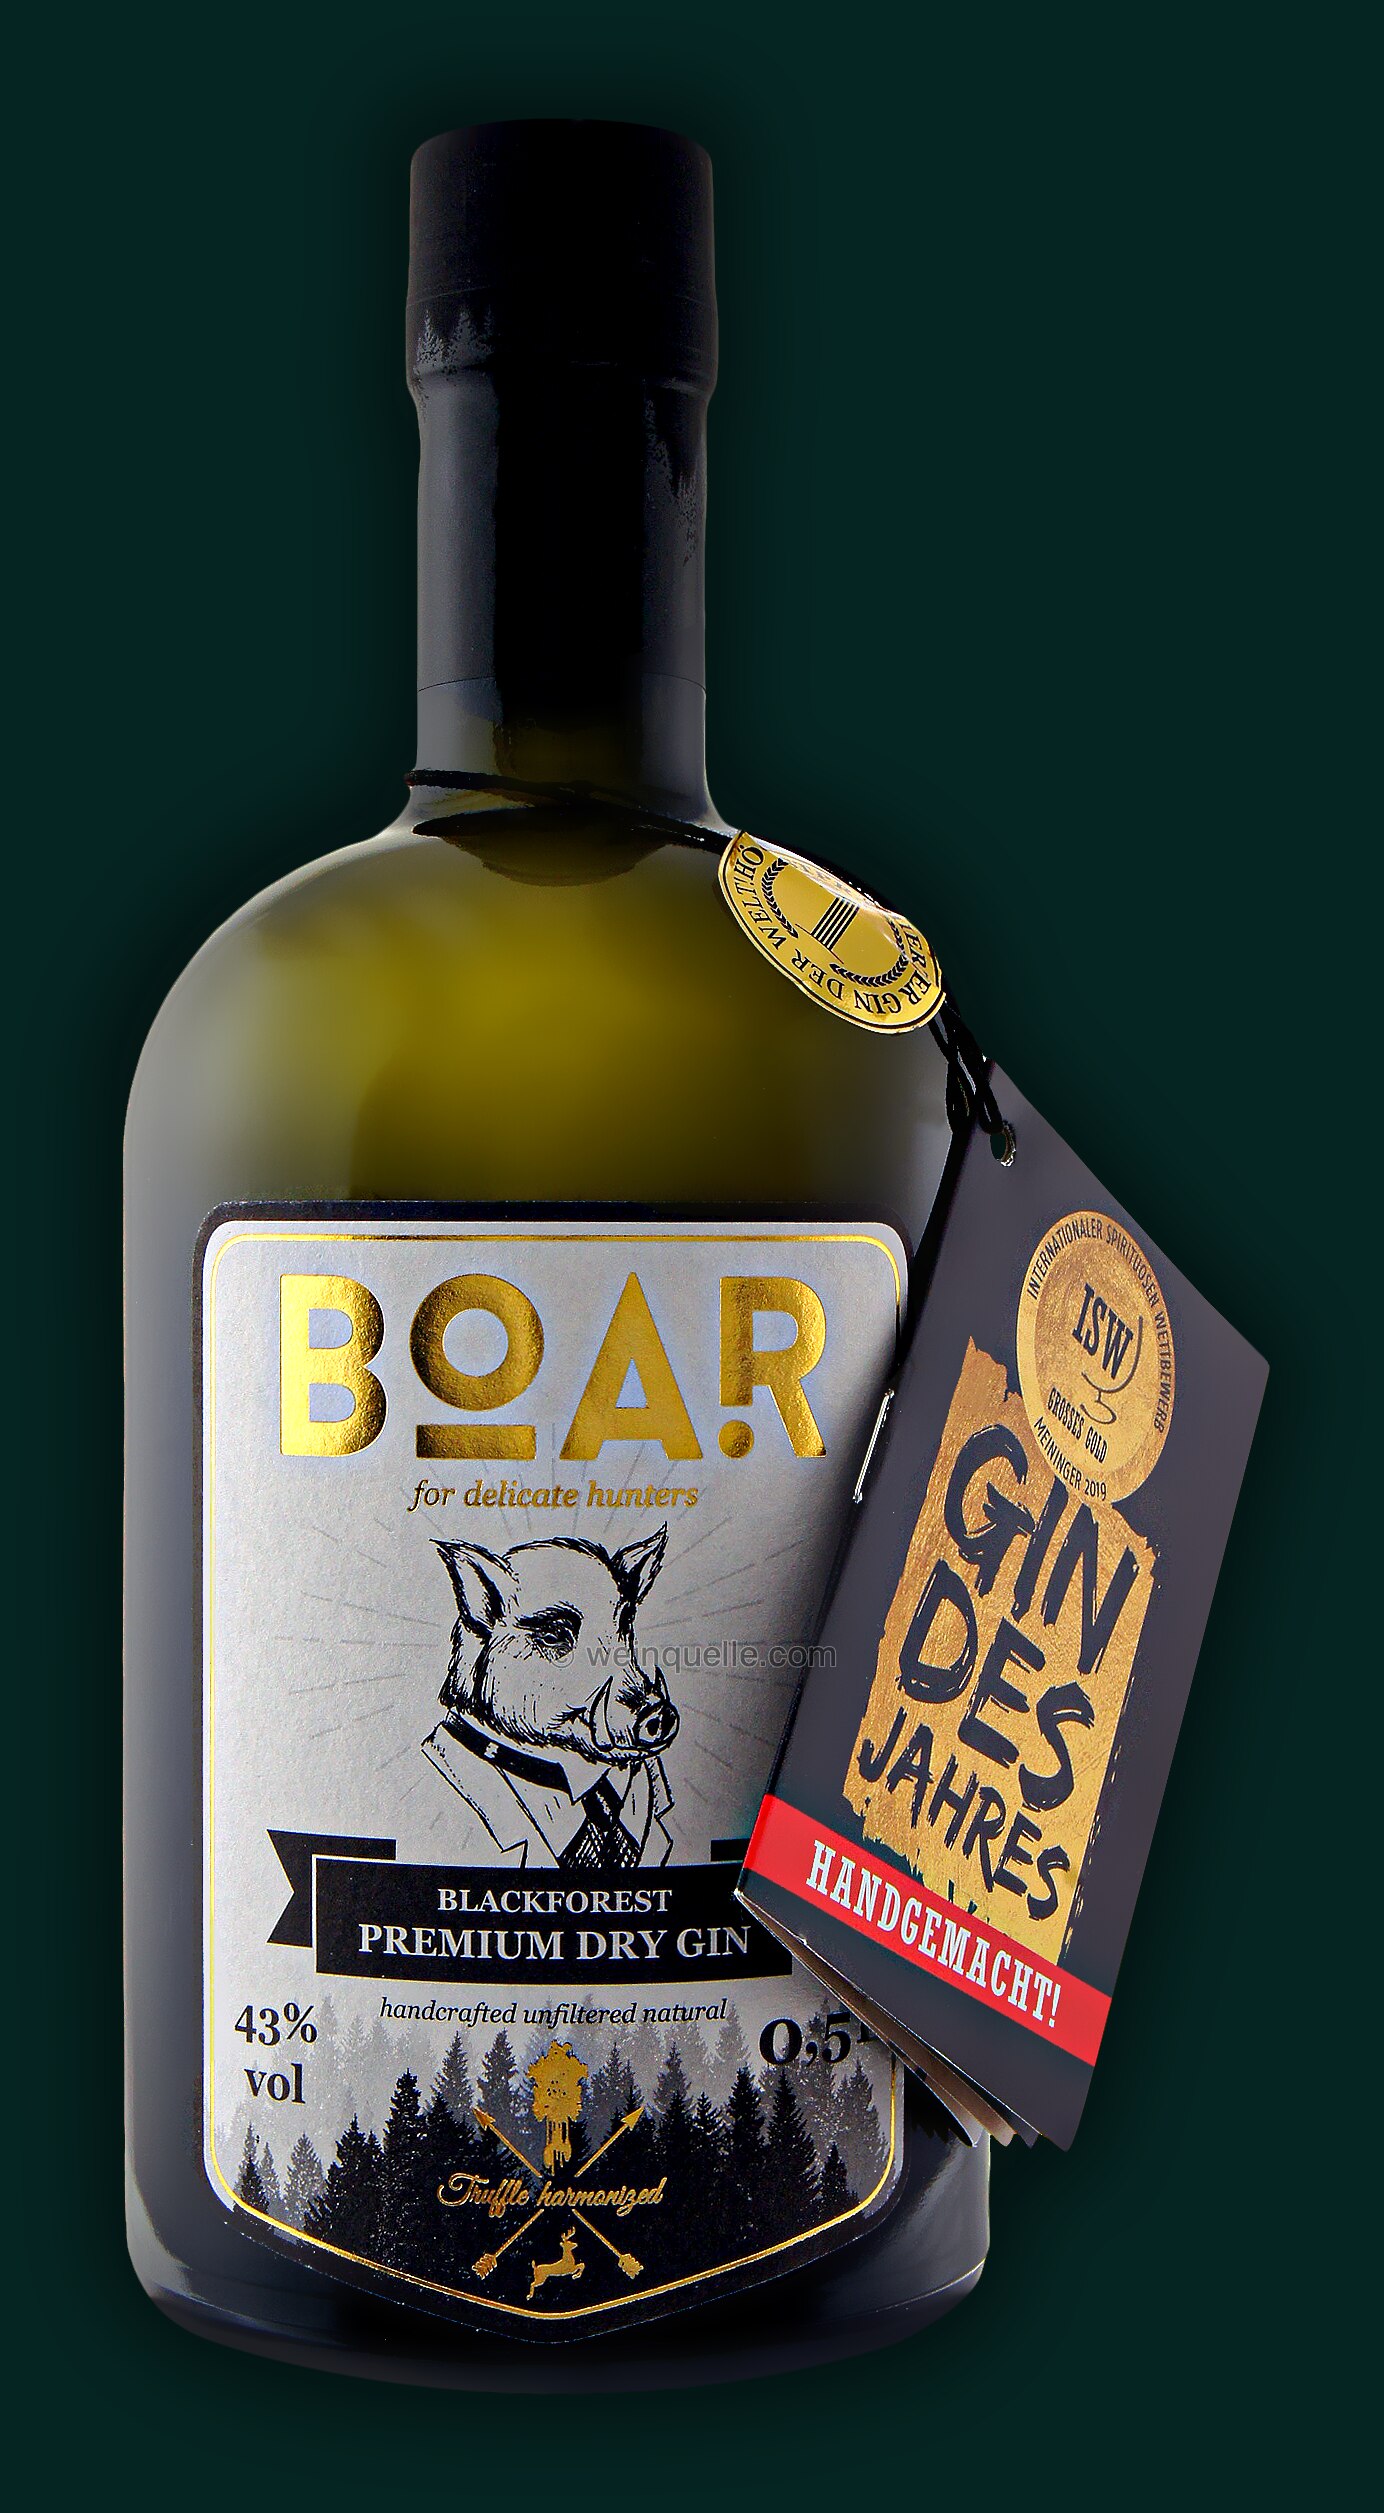 - 34,90 Boar Weinquelle Black Gin Lühmann Forest Dry € Premium 43%,